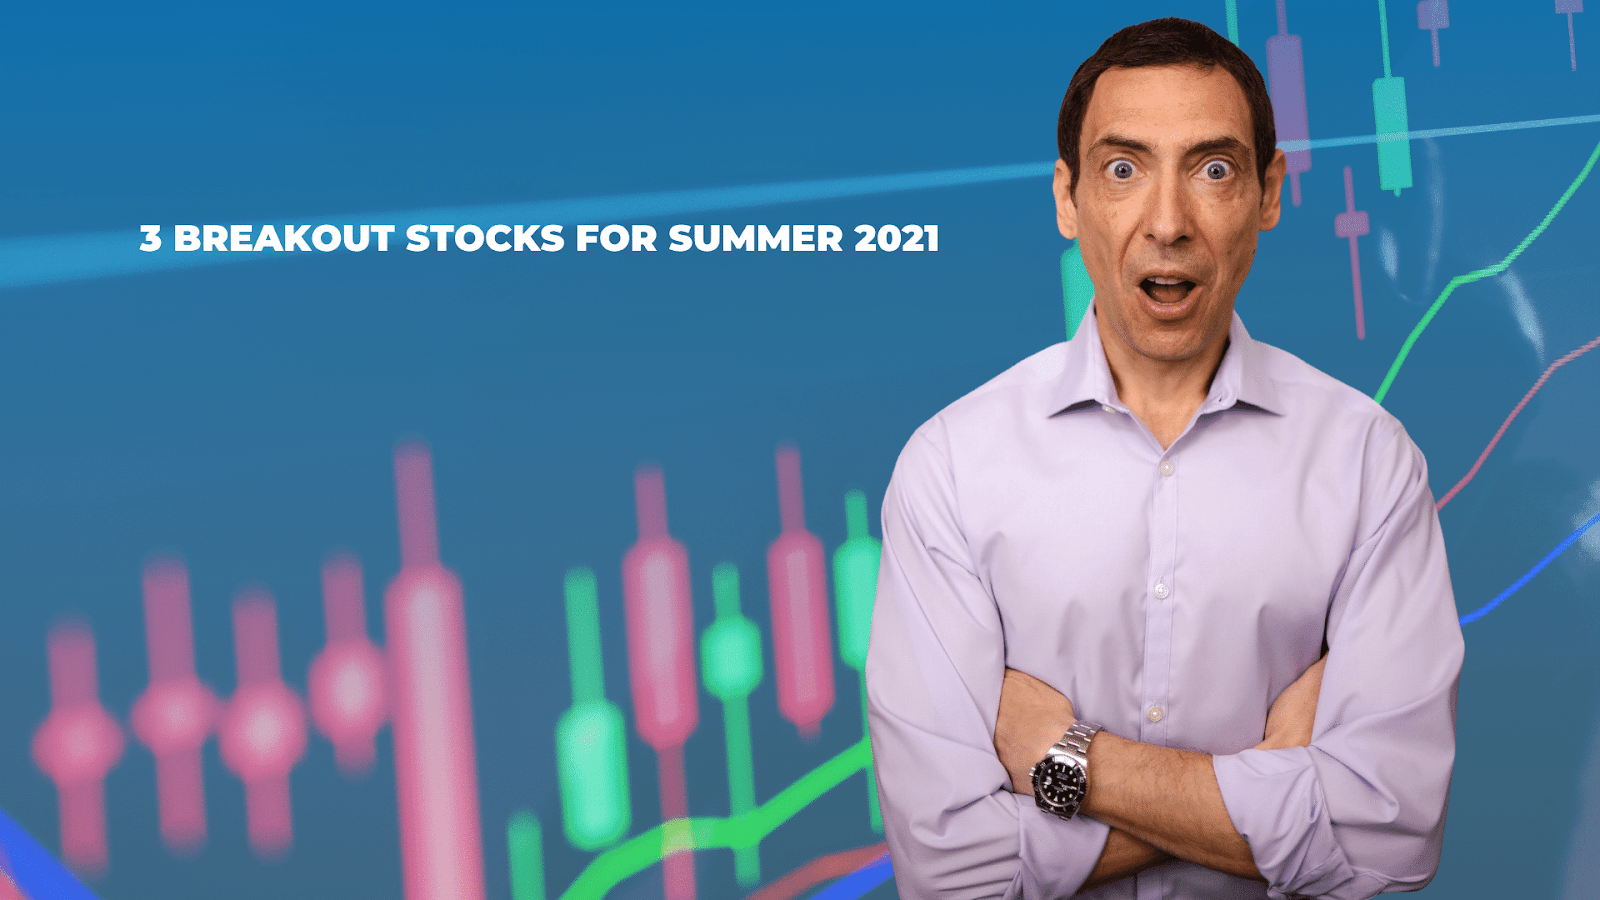 Best 2020 Stock Predictions